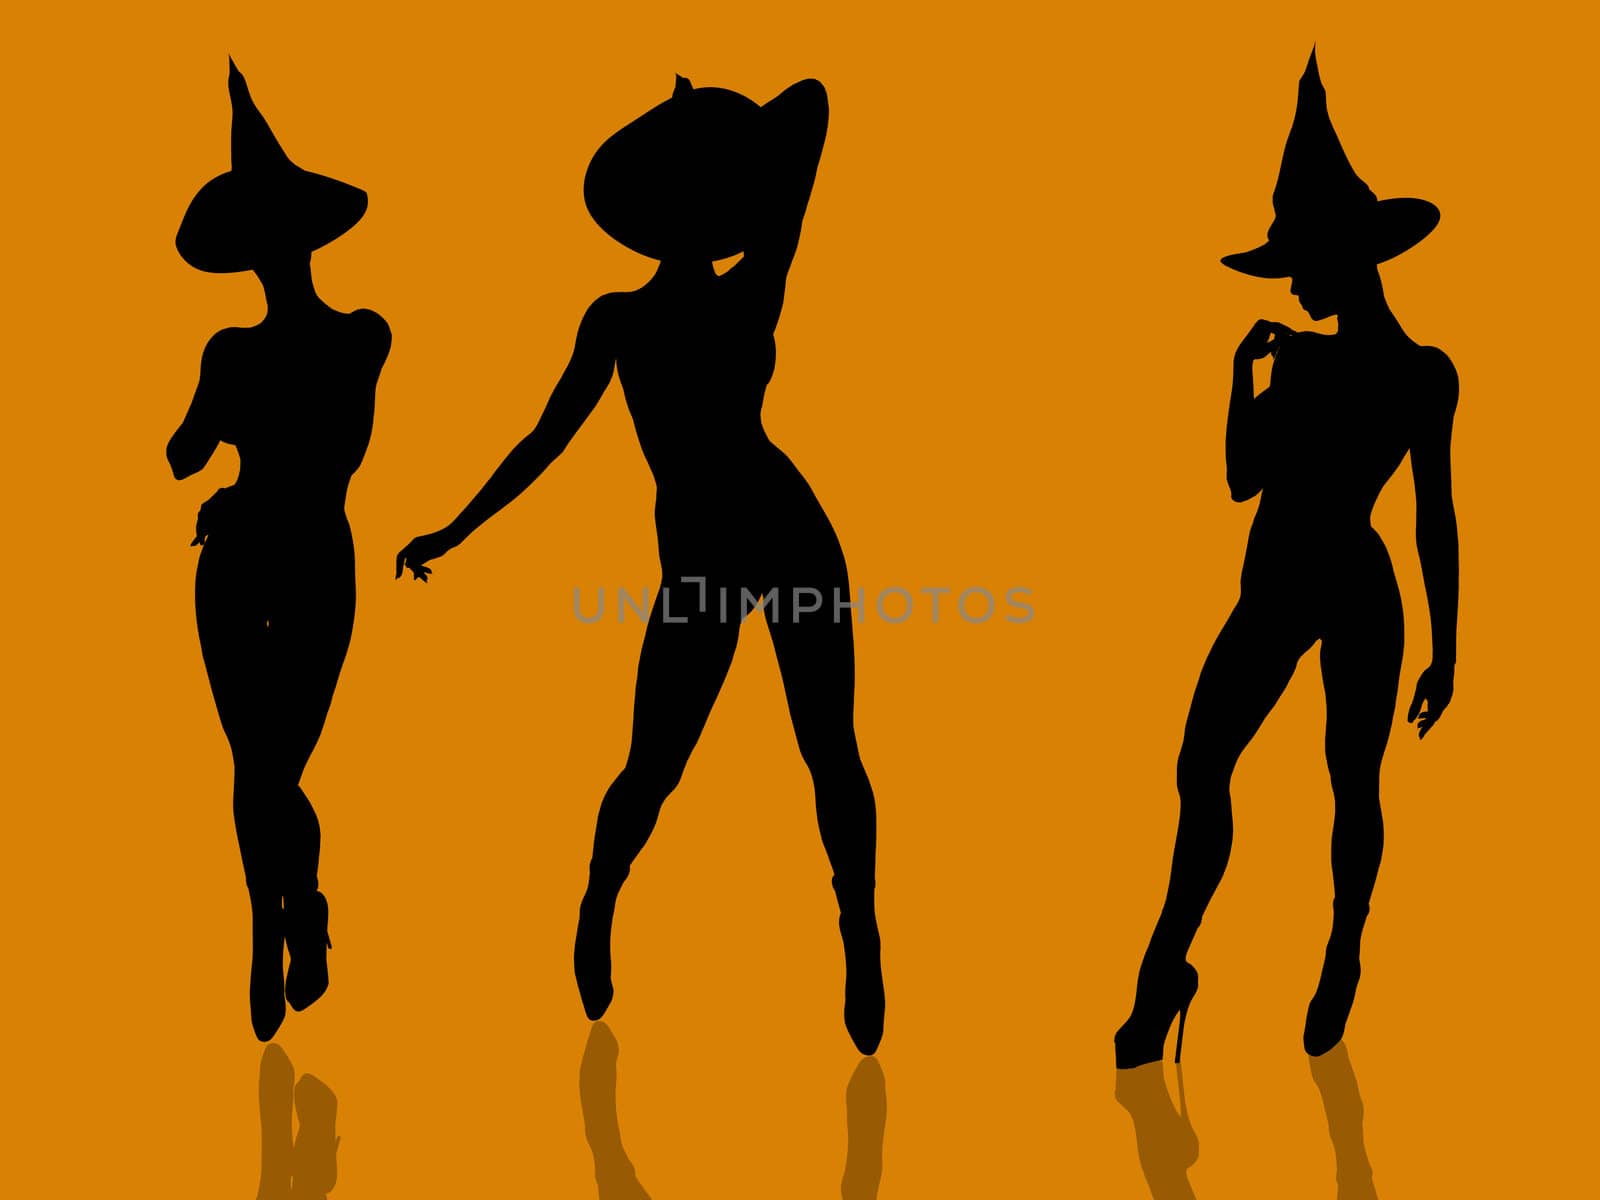 A  black halloween illustration silhouette on an orange background